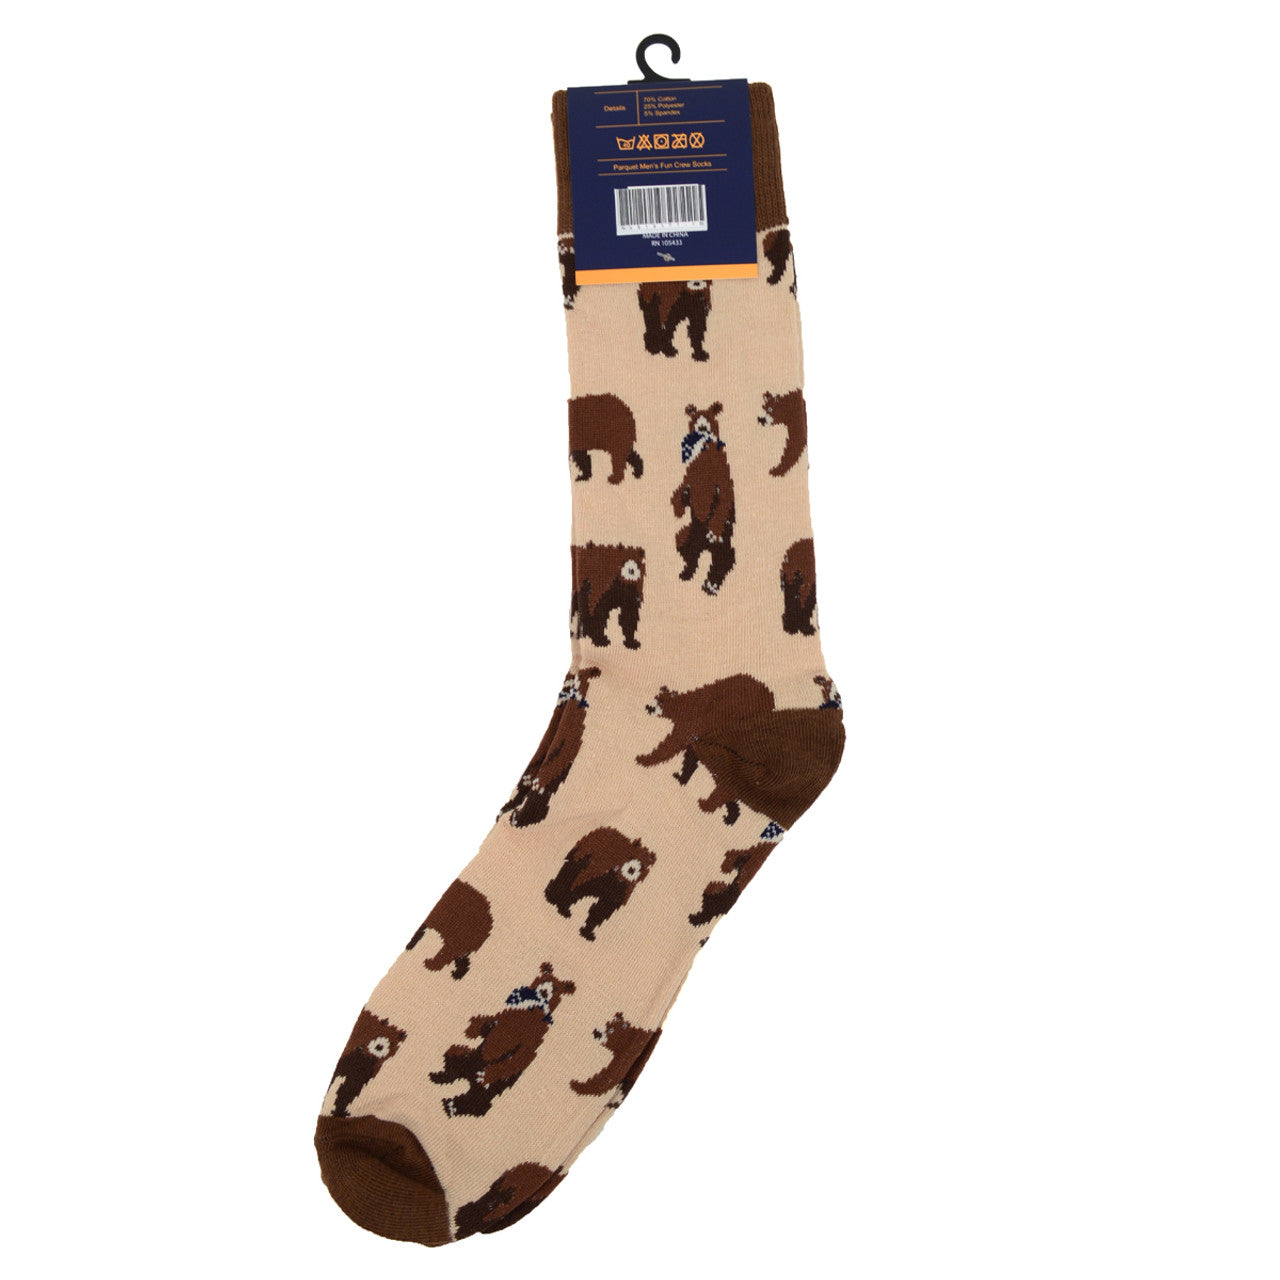 Men's Brown Bear Novelty Socks Outdoor Fun Camping Hiking Gift for Dad Bears Everywhere Socks Light Brown and Dark Brown Bears